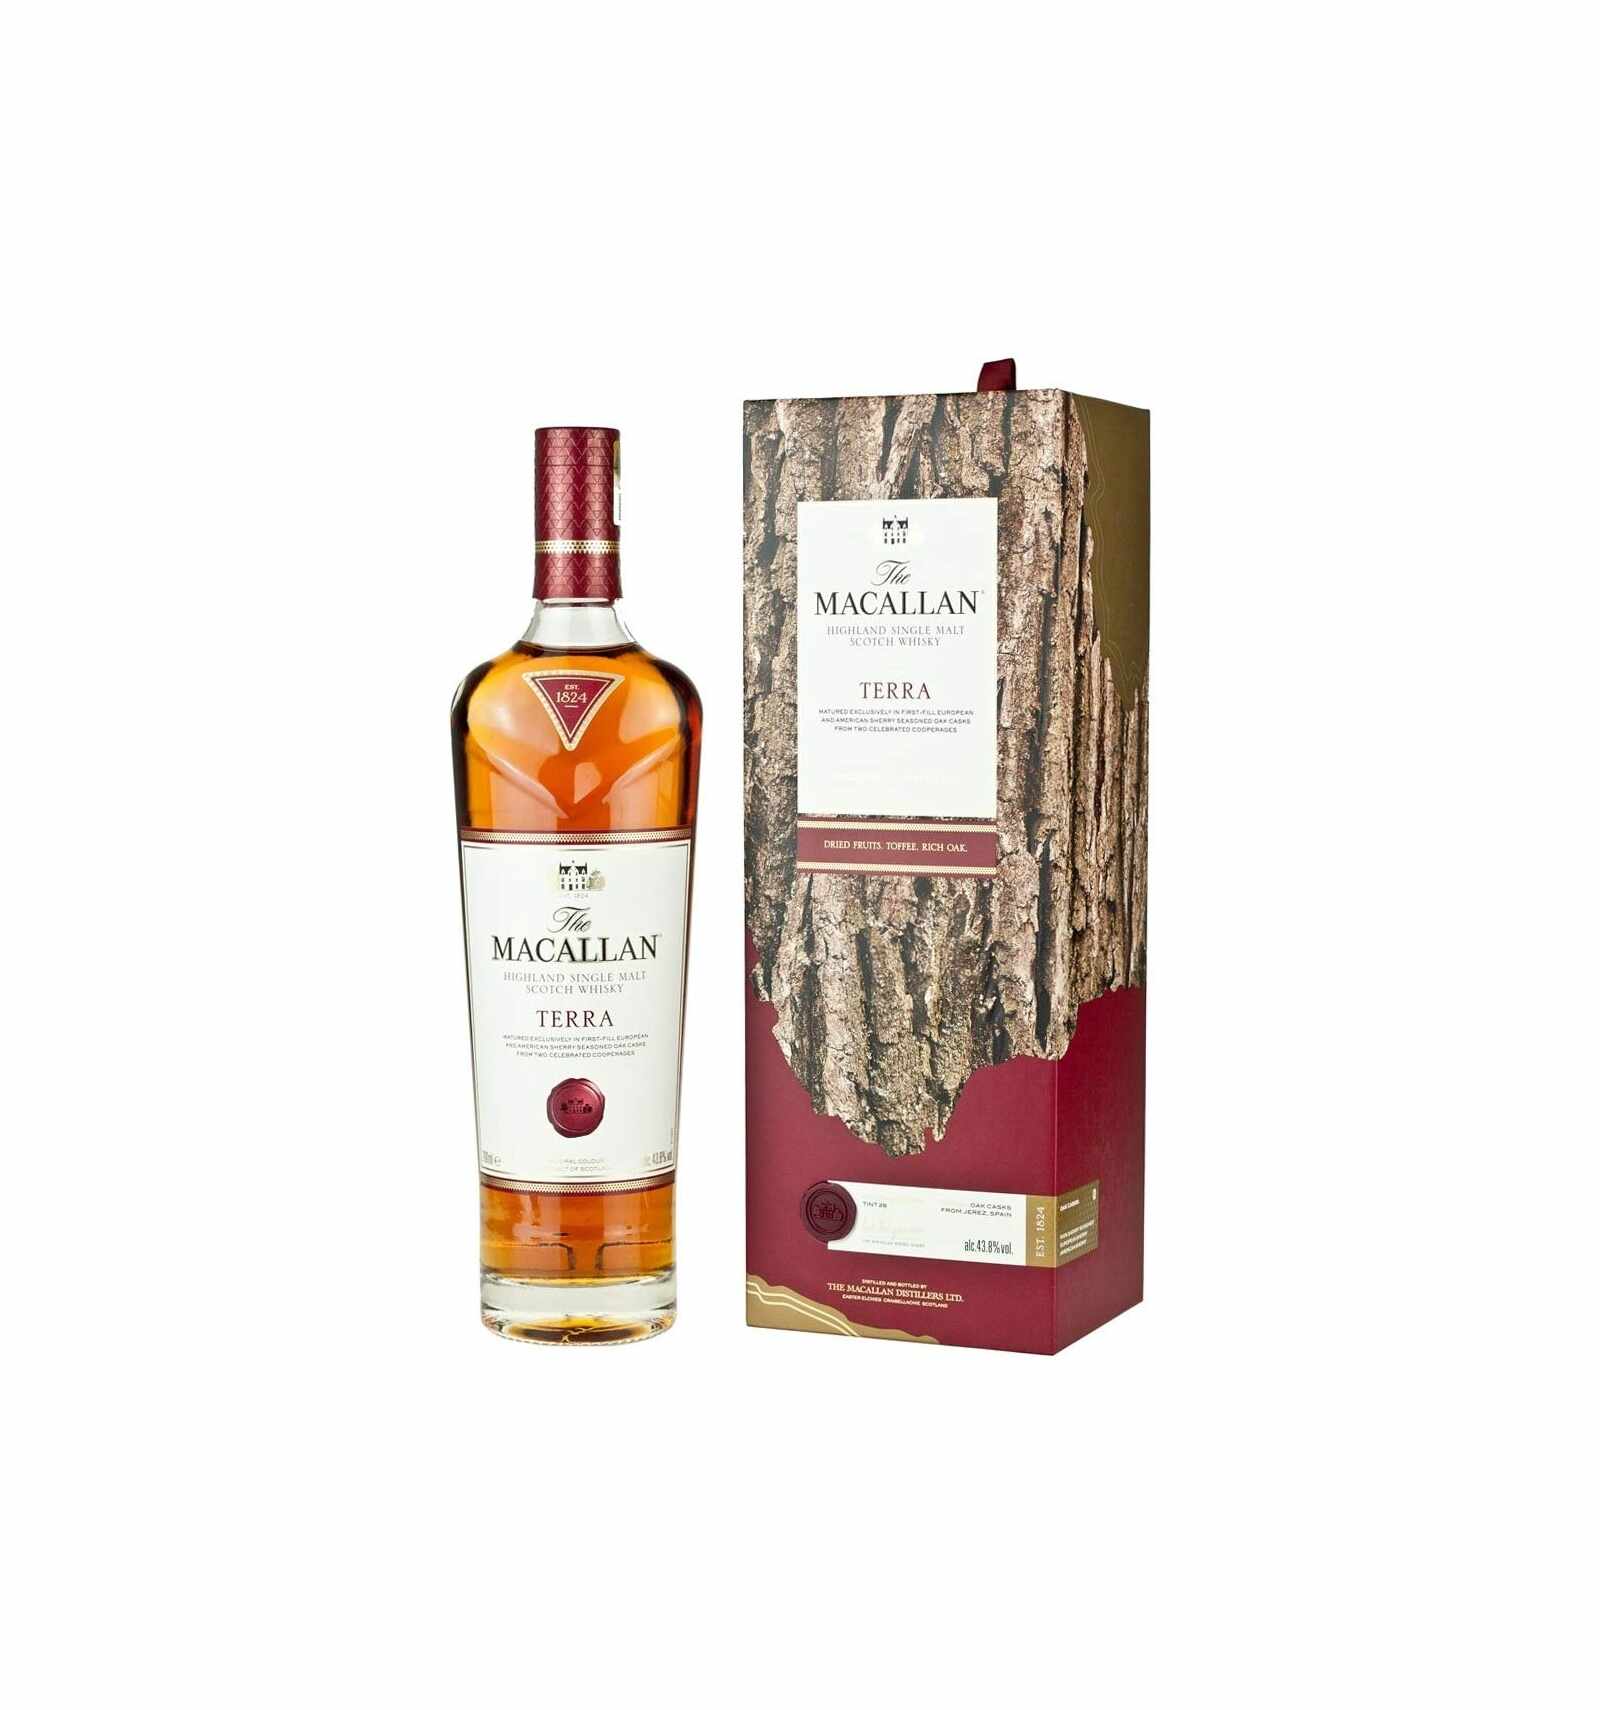 Whisky Macallan Terra, 43.8% alc., 0.7L, Scotia